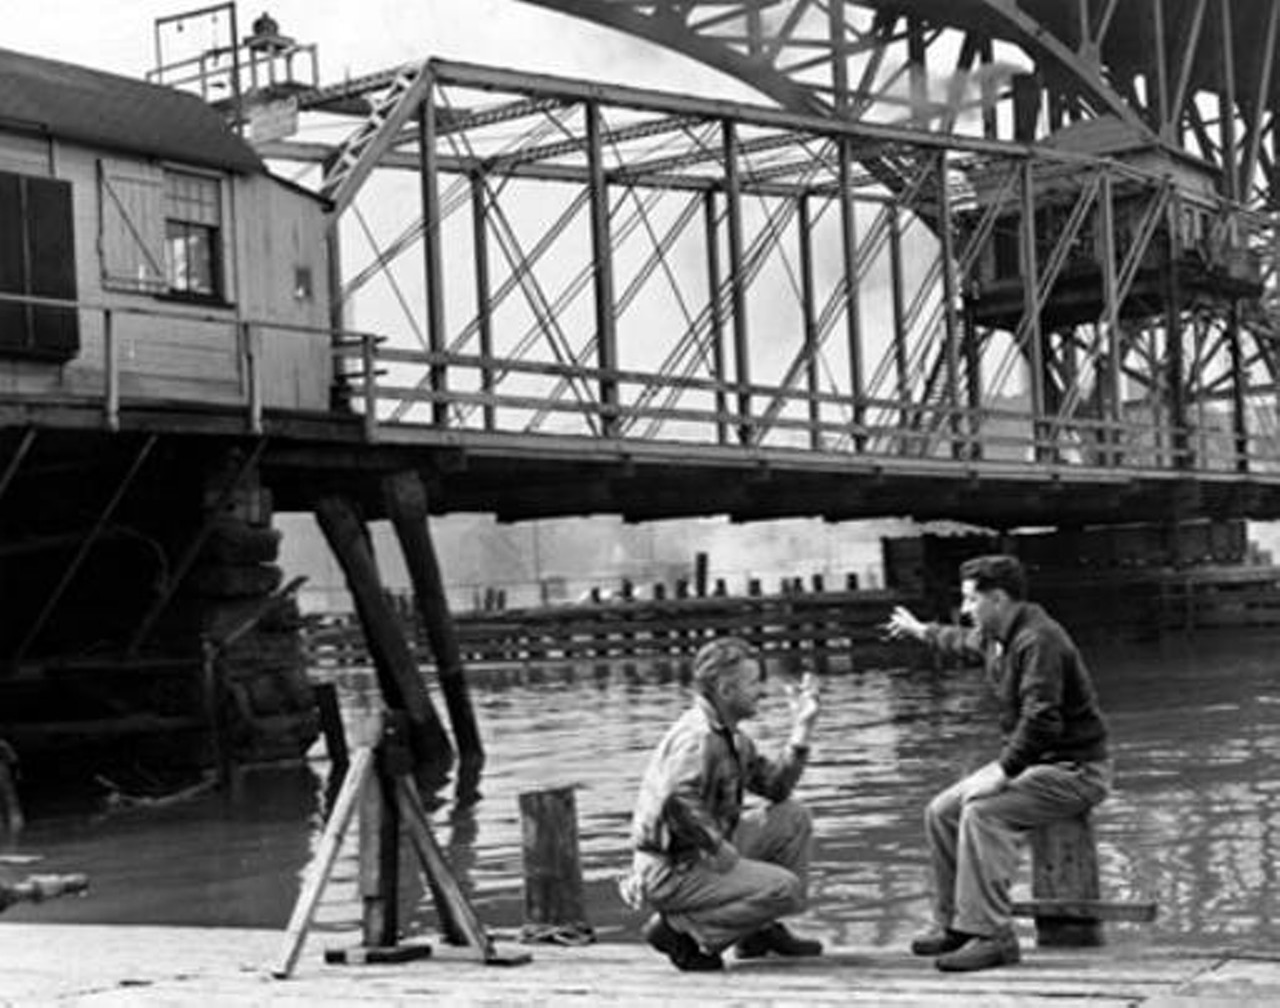 Men taking a break on the side of Cuyahoga River, 1945.